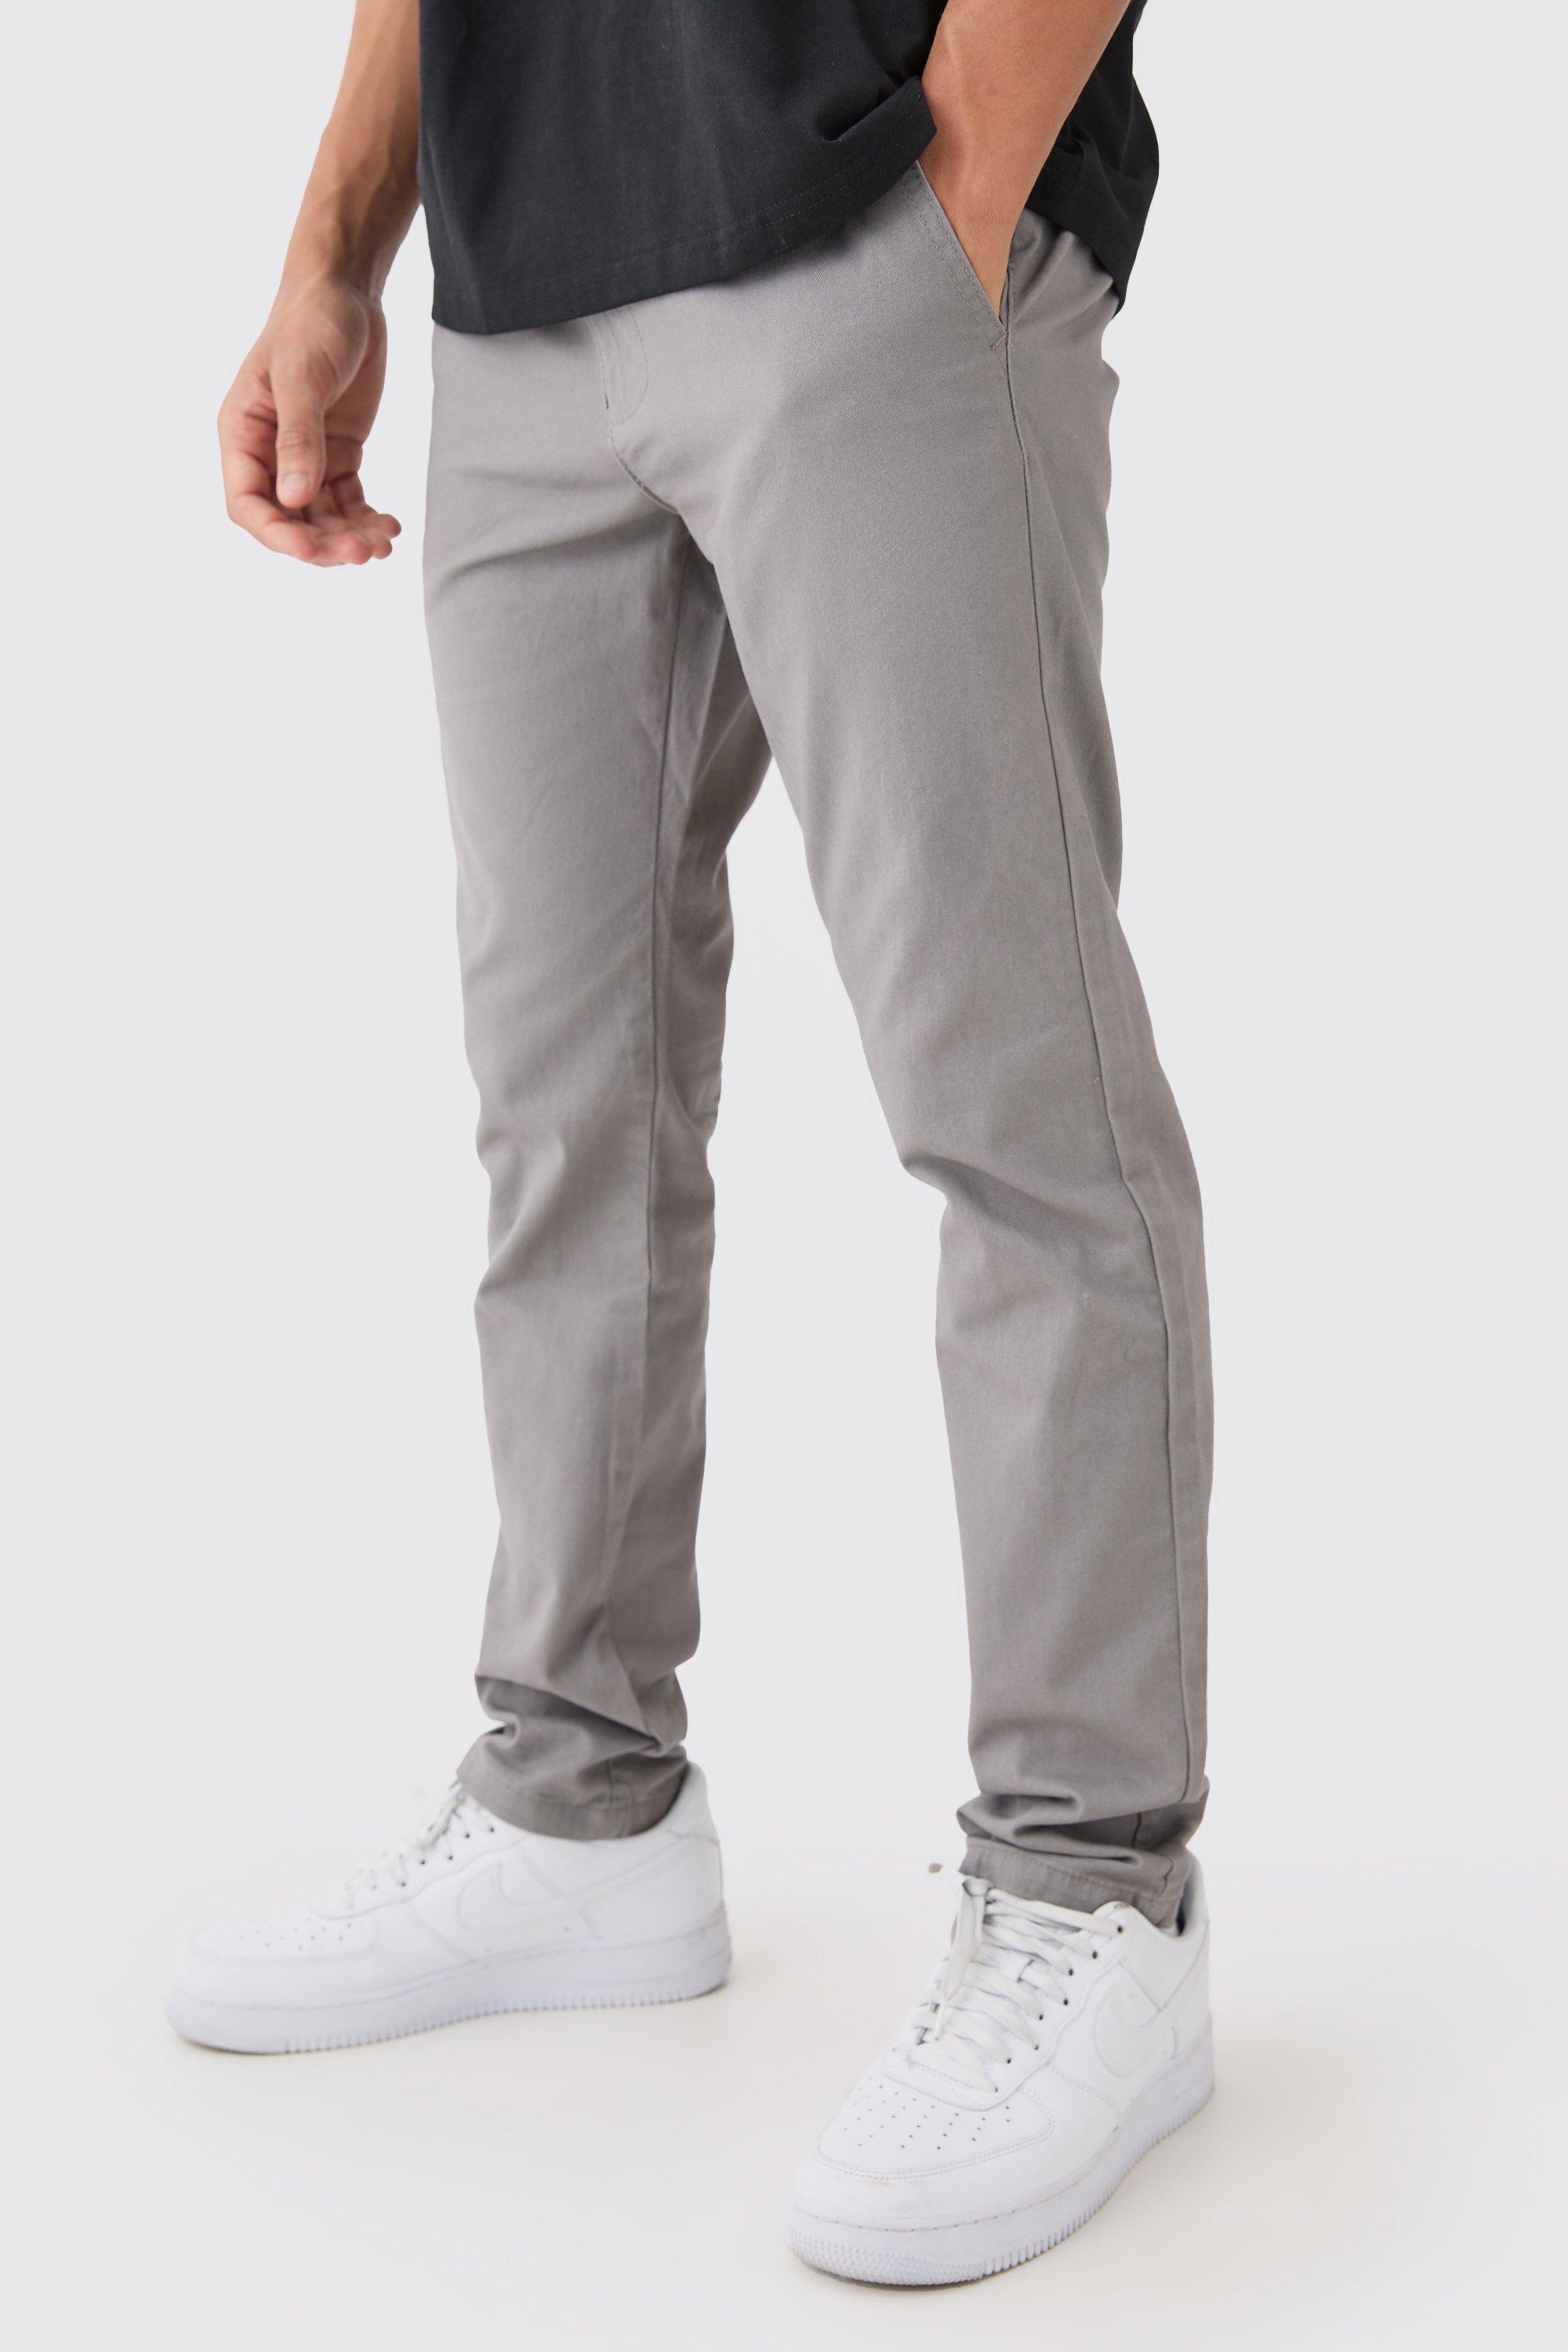 pantalon chino skinny homme - gris - 28, gris